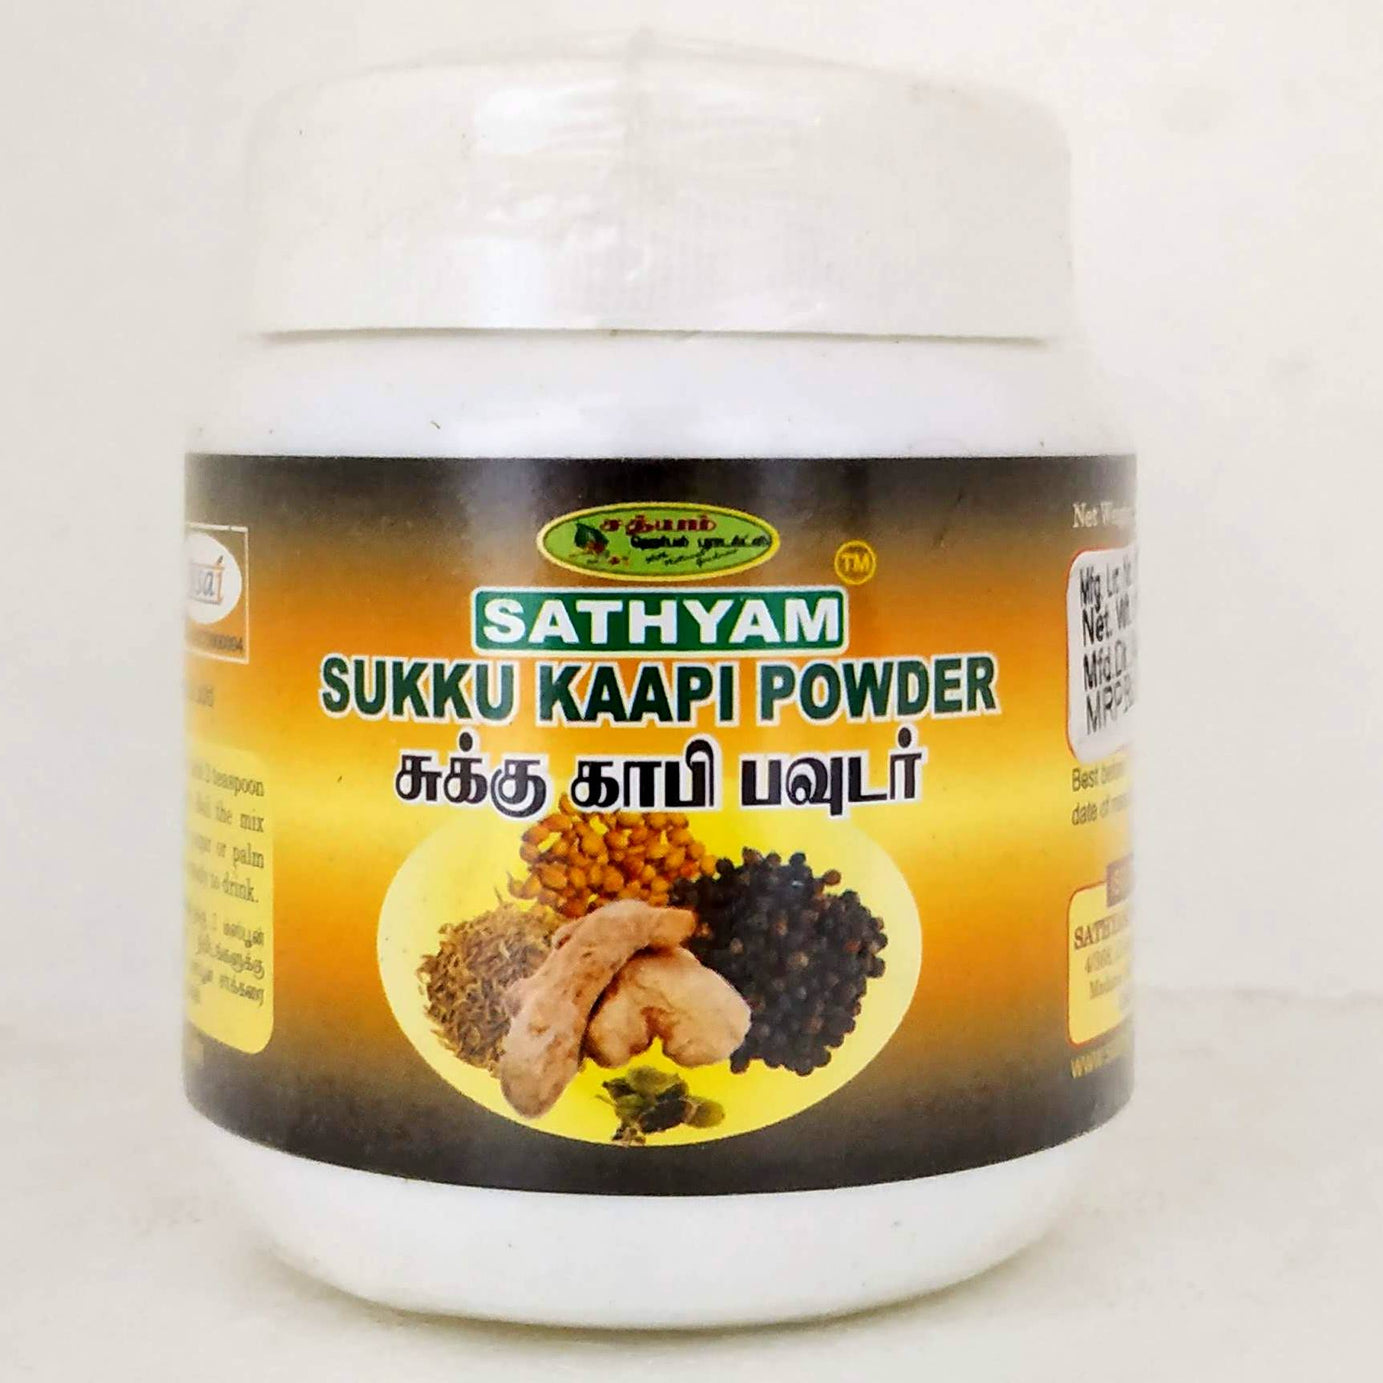 Shop Chukku Kaapi Powder 100gm at price 60.00 from Sathyam Herbals Online - Ayush Care